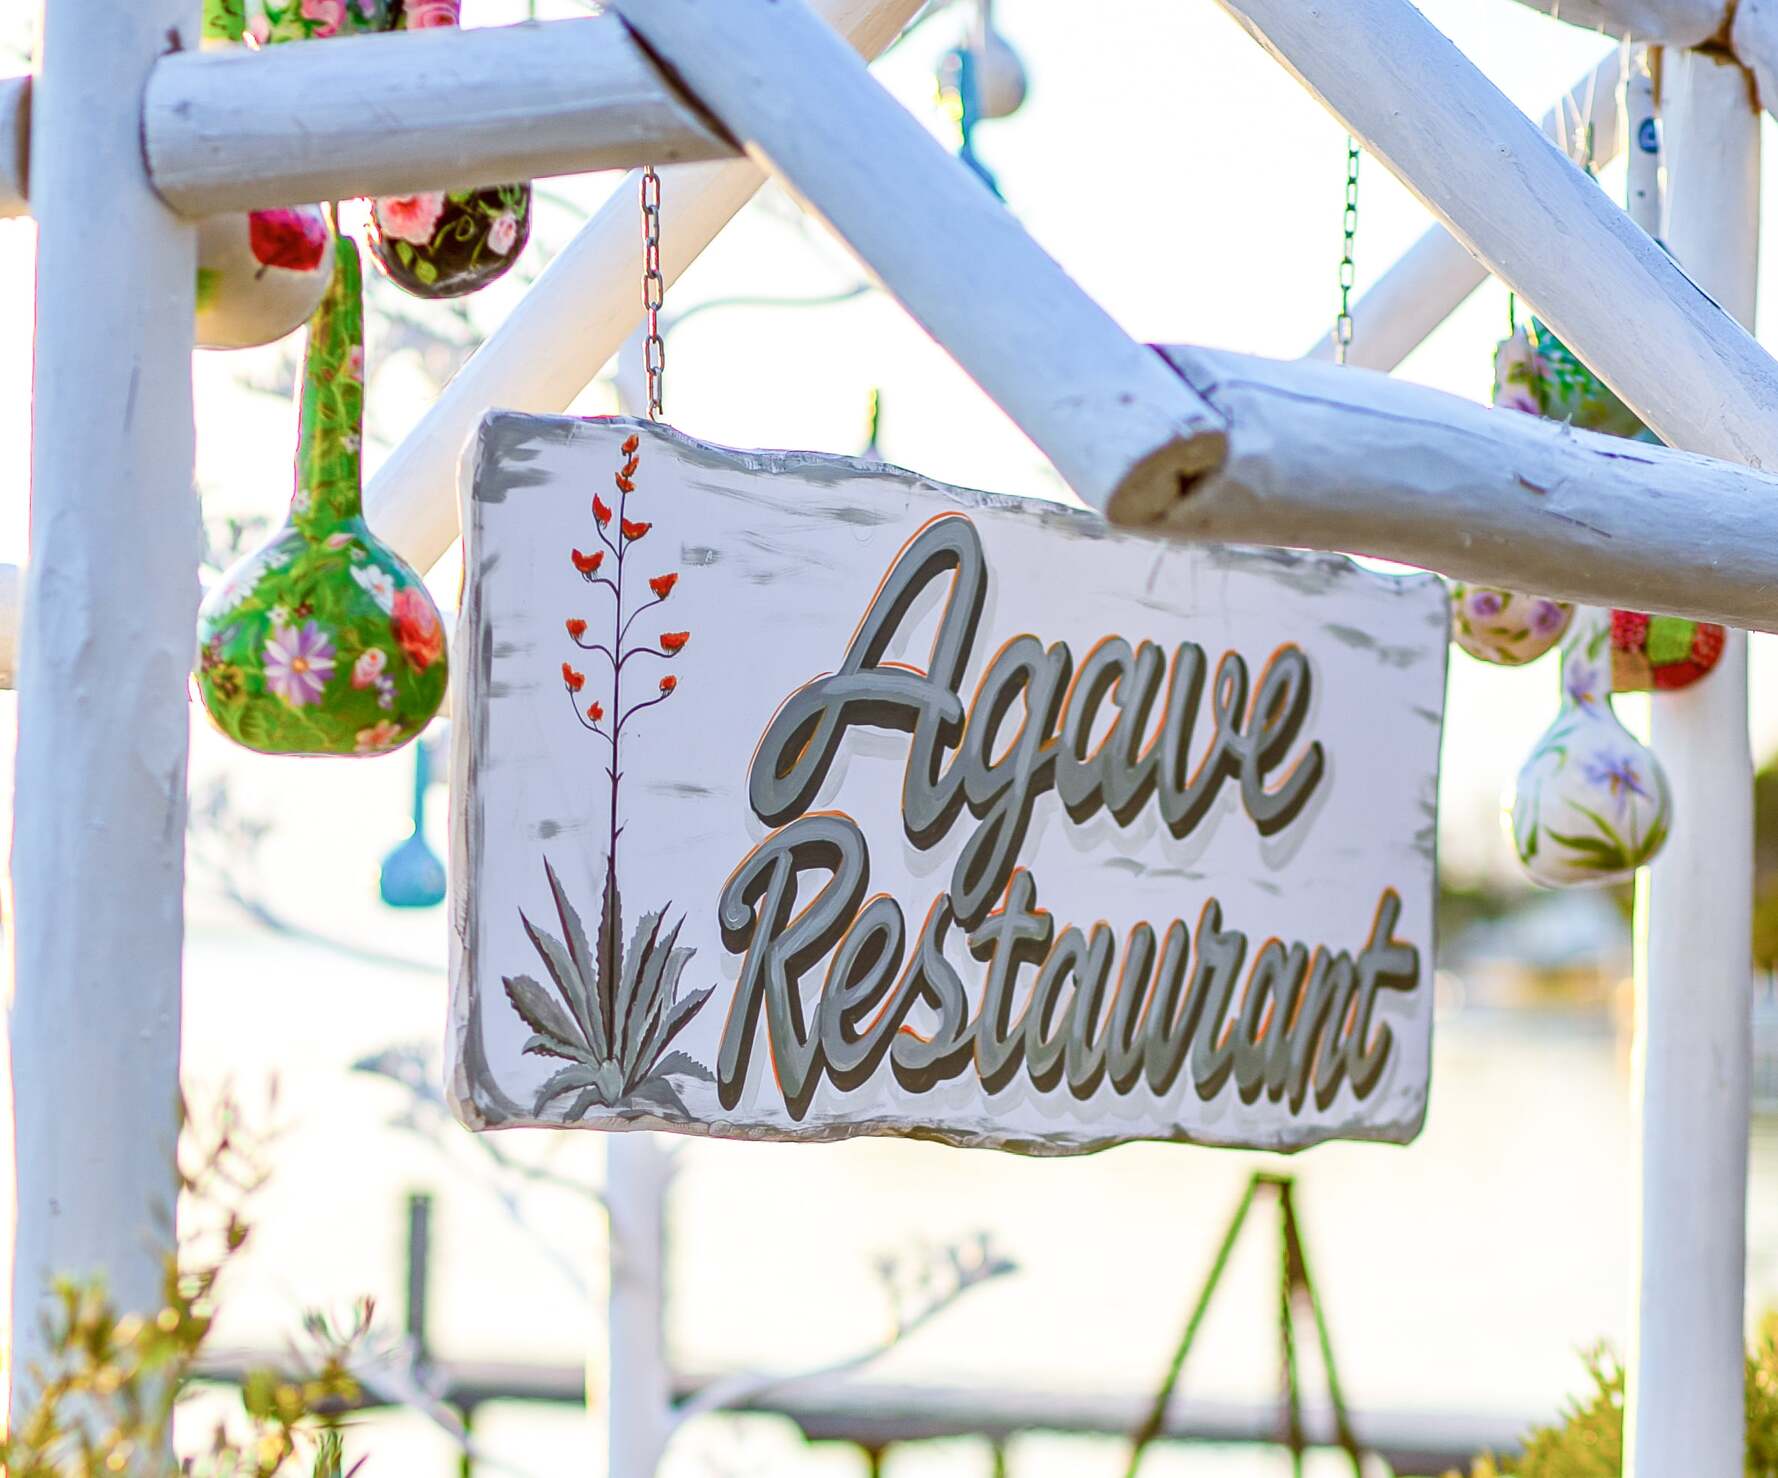 MW Phokaia Beach & Resort - Agave Restoran